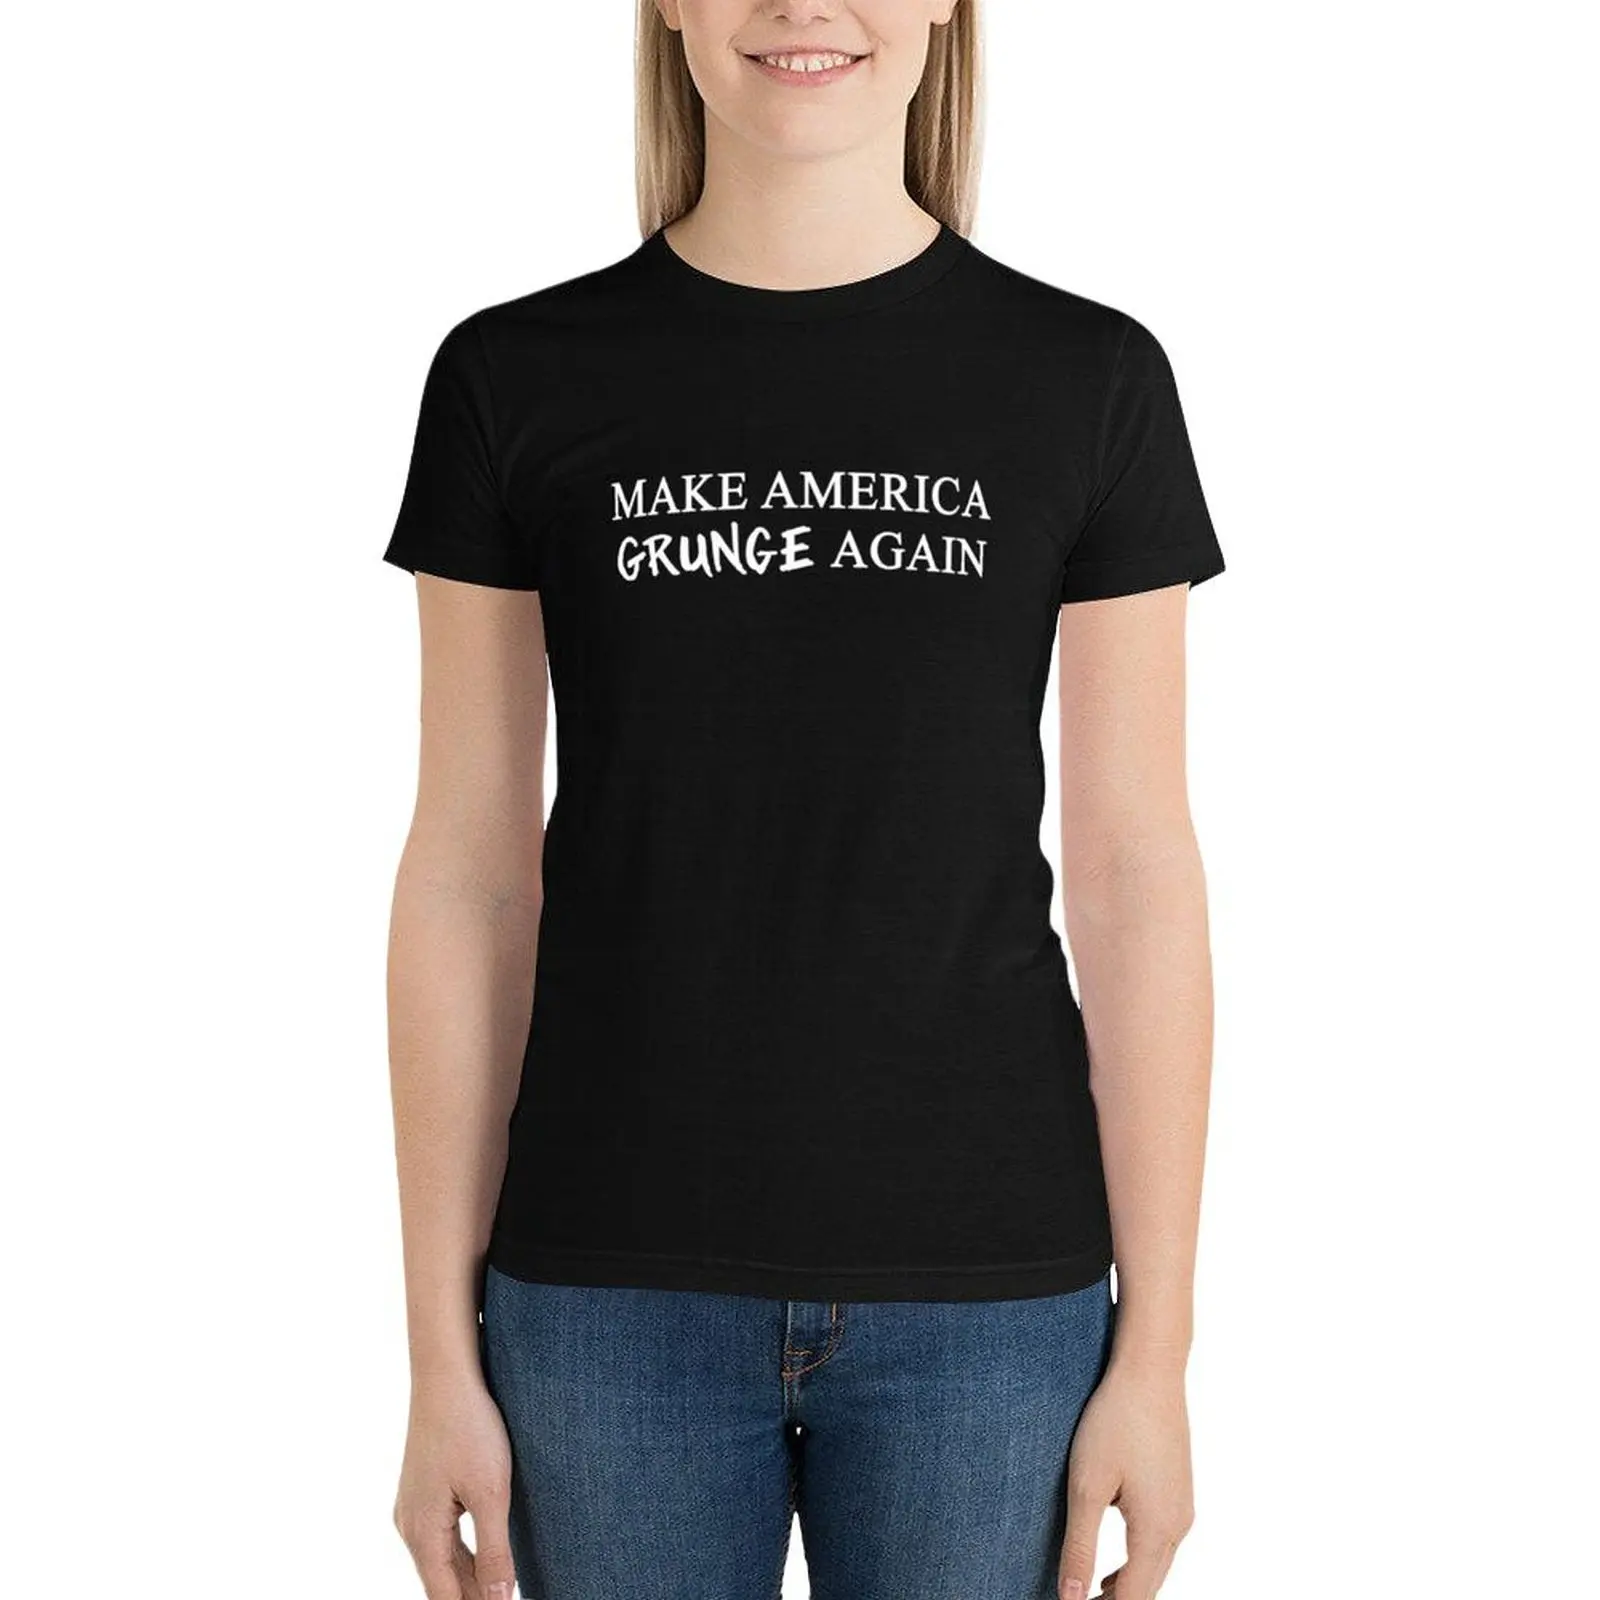 

MAGA Make America Grunge Again футболка Эстетическая одежда милые топы Летняя одежда кавайная одежда женская одежда